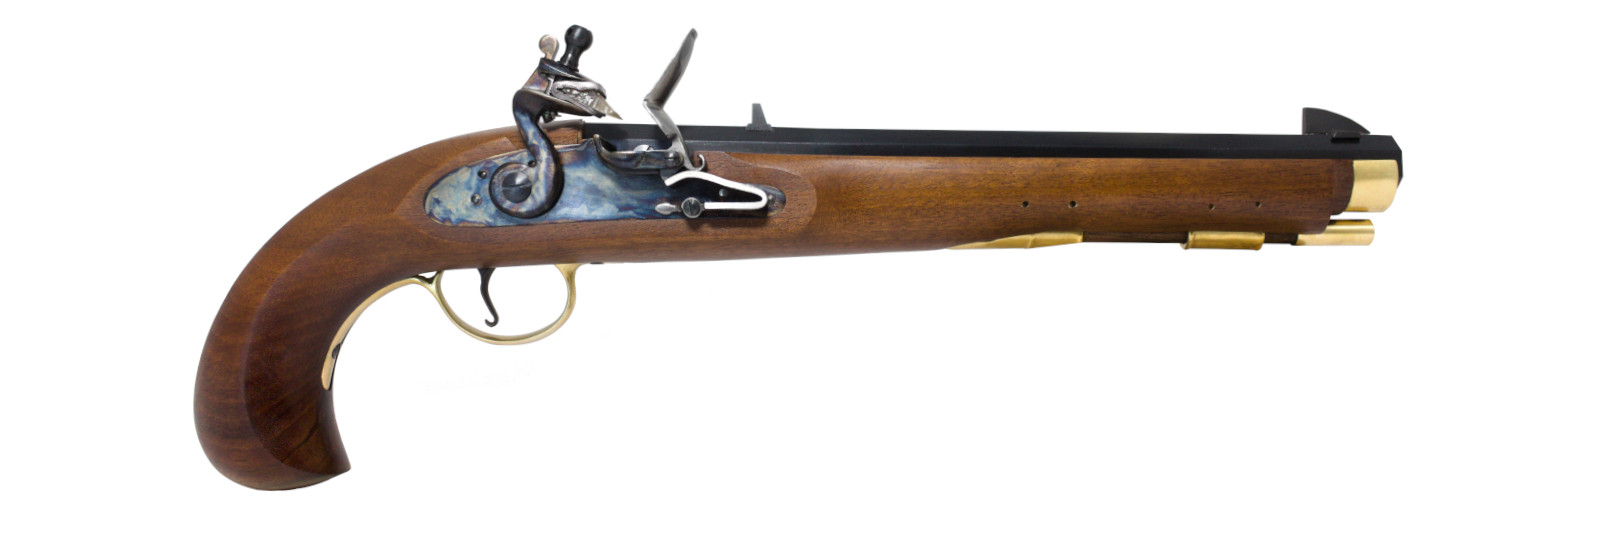 Kentucky Pistol flintlock model